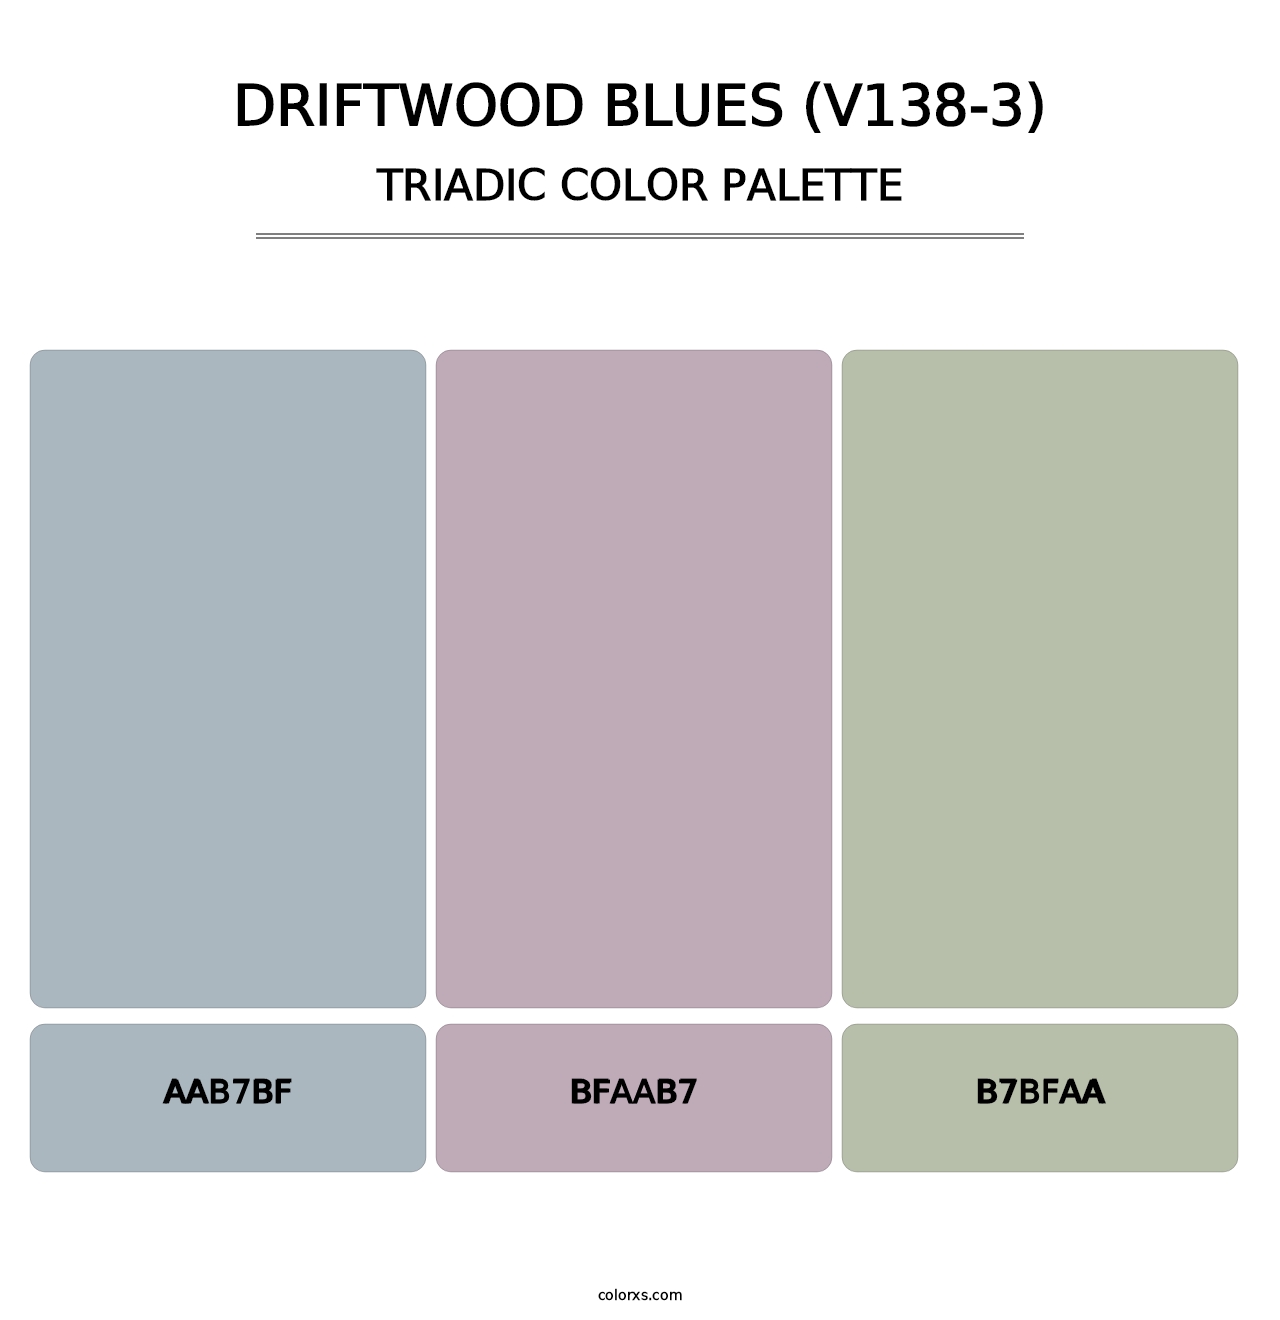 Driftwood Blues (V138-3) - Triadic Color Palette